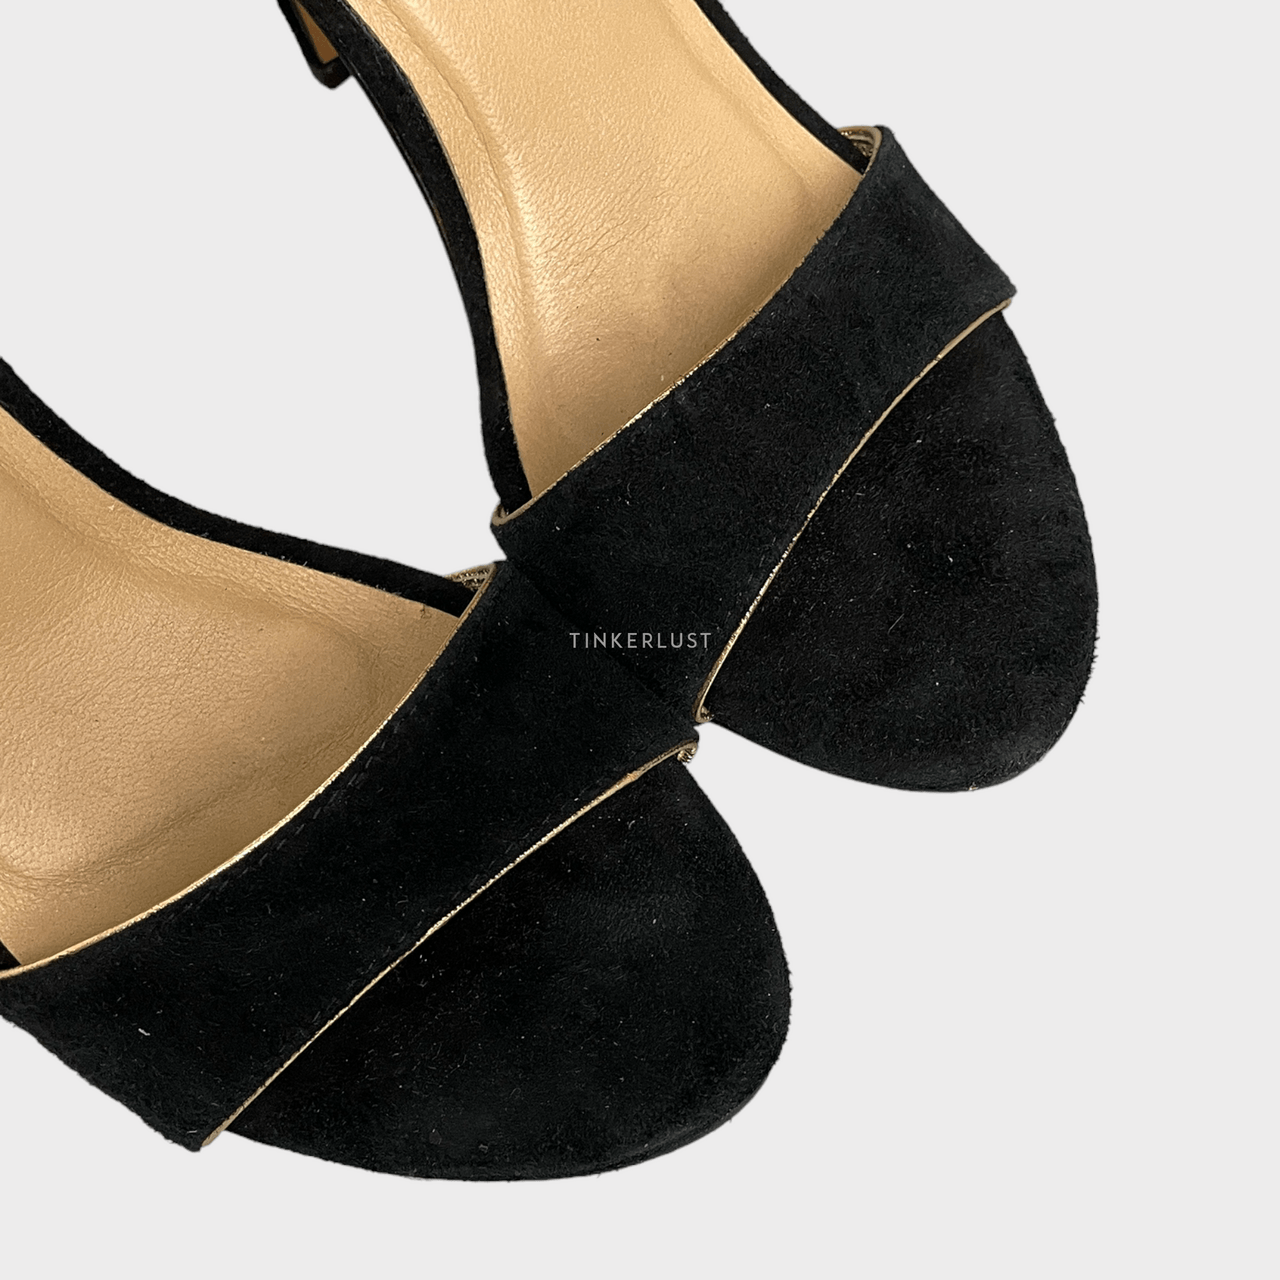 Jasmine Elizabeth Gold & Black Heels